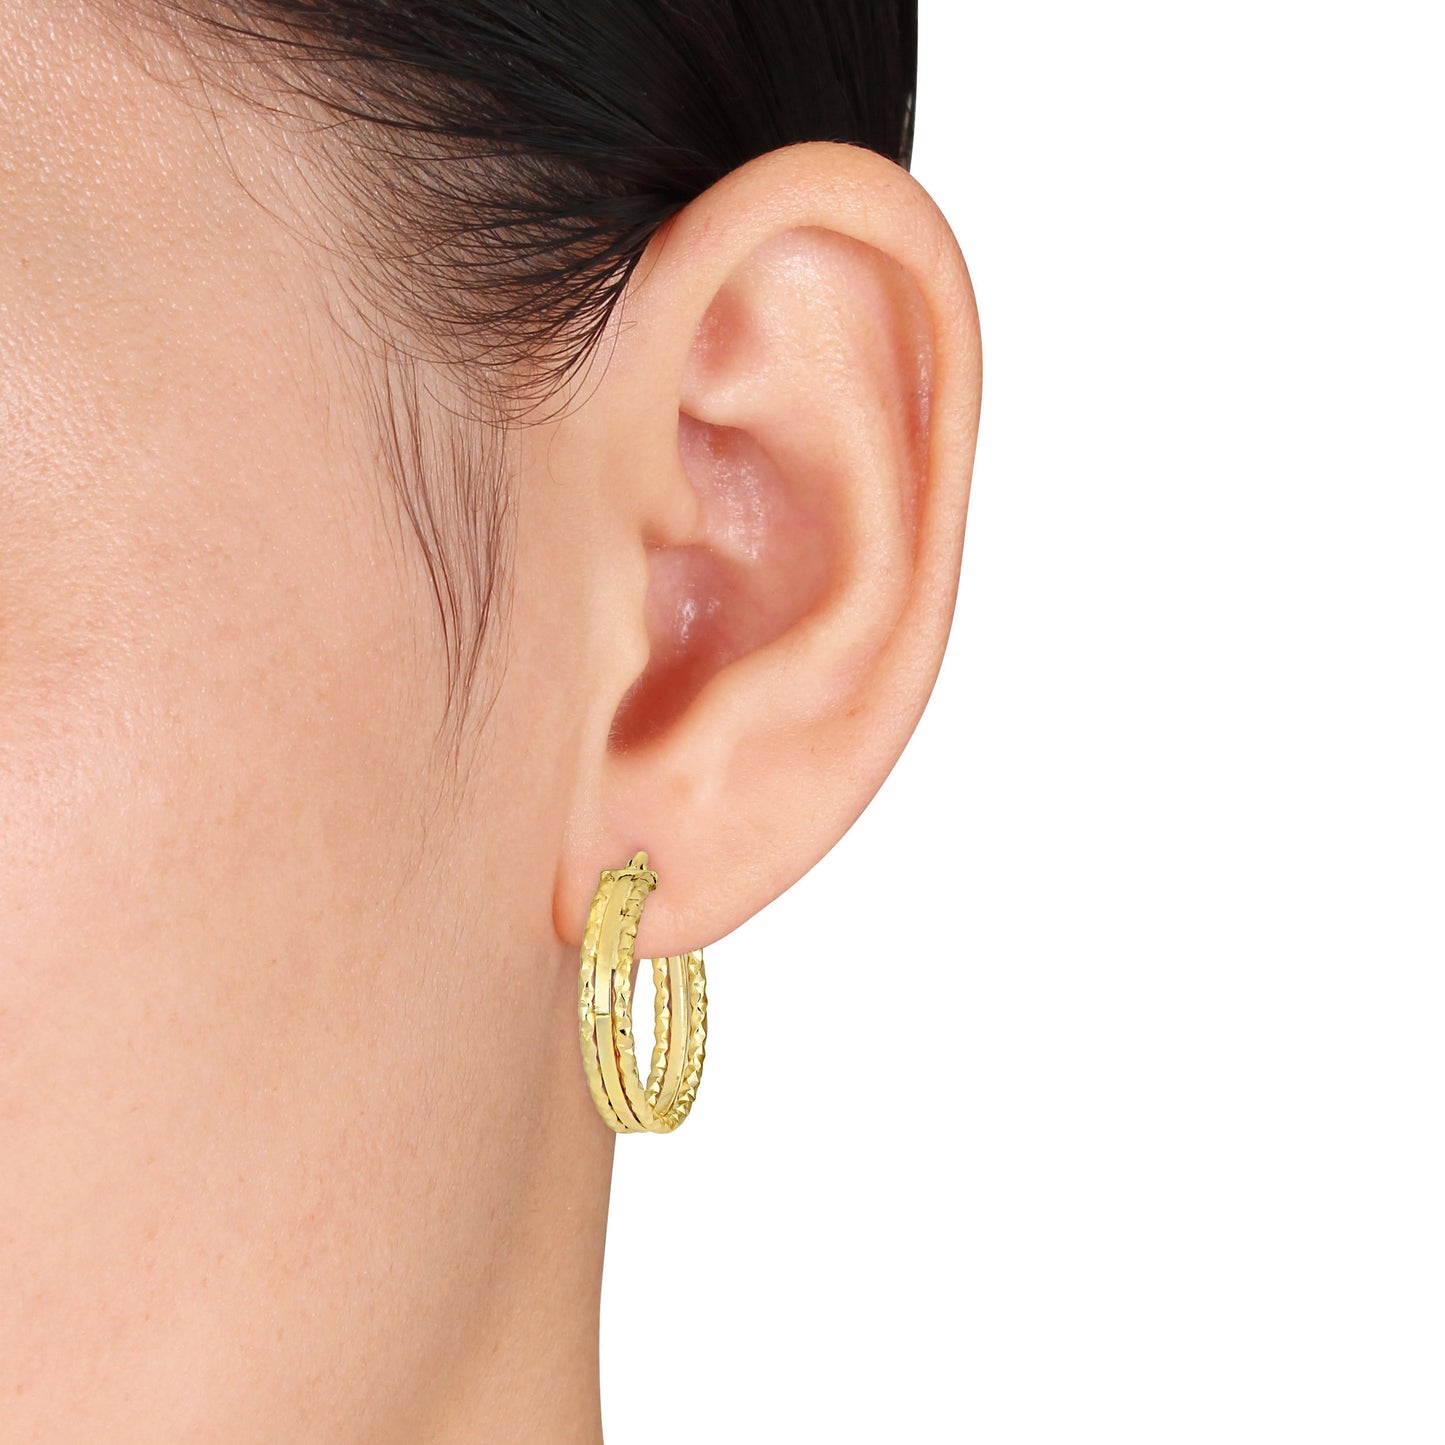 3-Row Hoop Earrings in 10k Yellow Gold